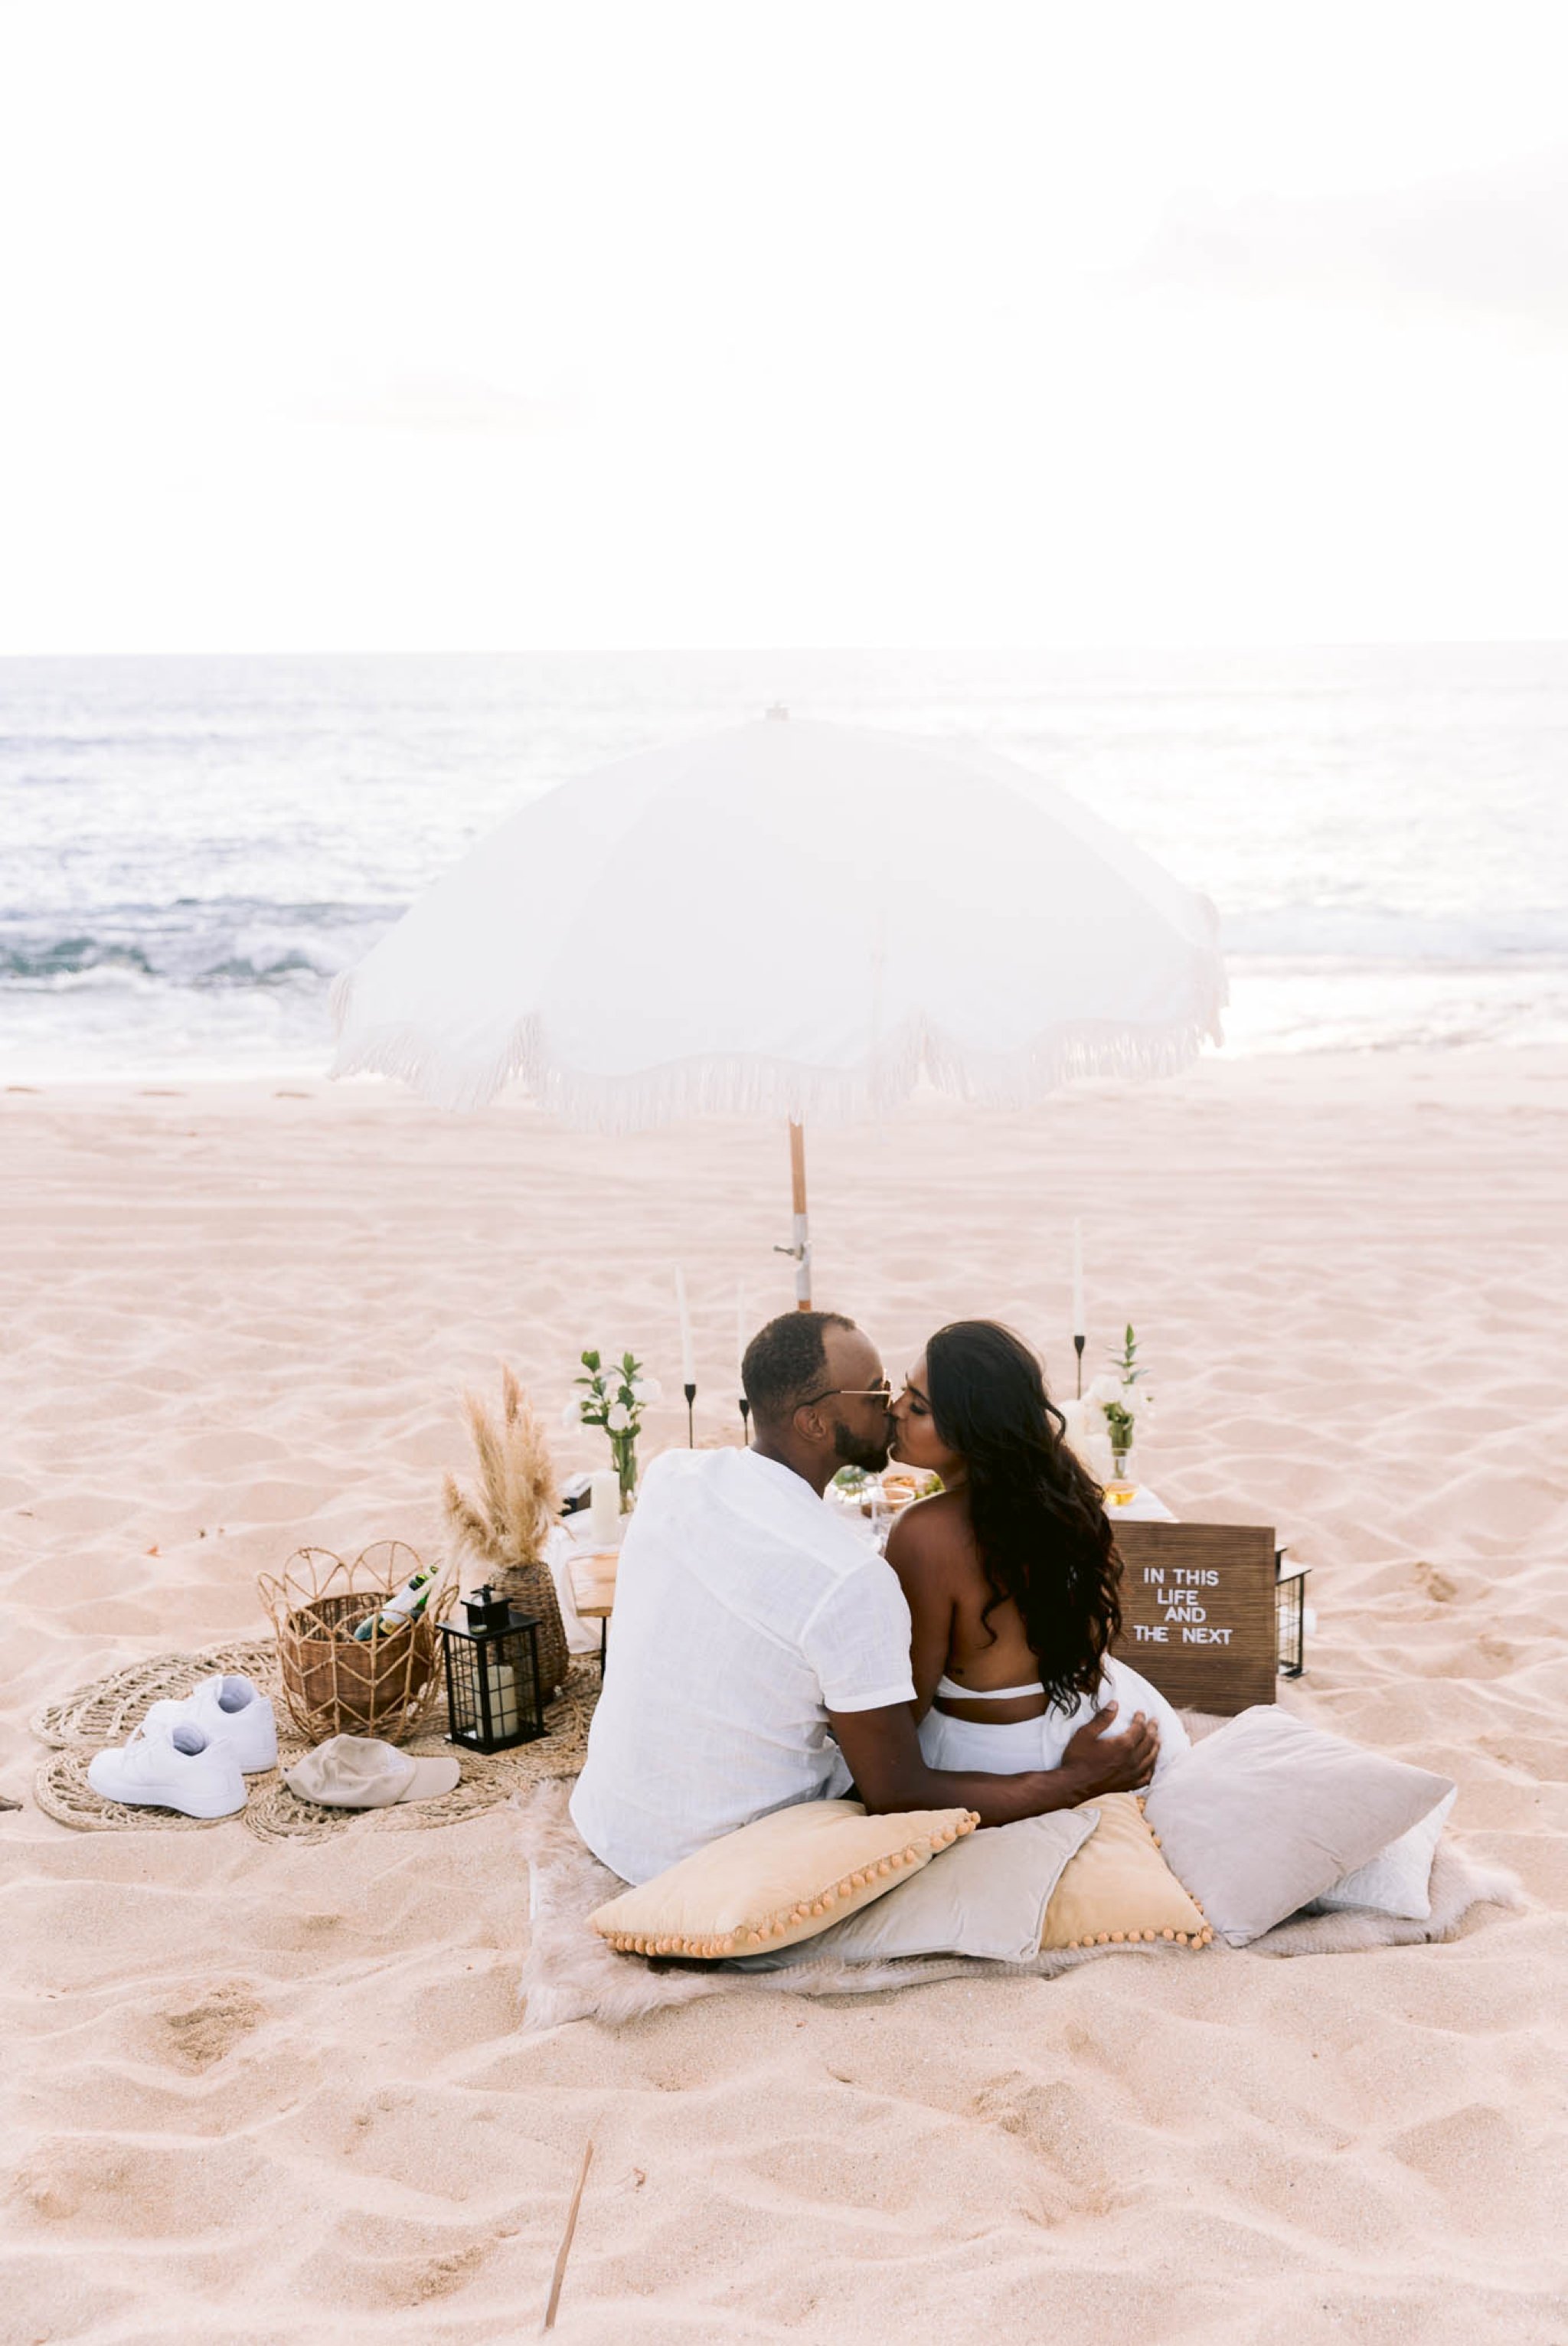 Romantic Oahu Date Night Idea - Sunset Picnic at the Beach - Honolulu Engagement Photographer